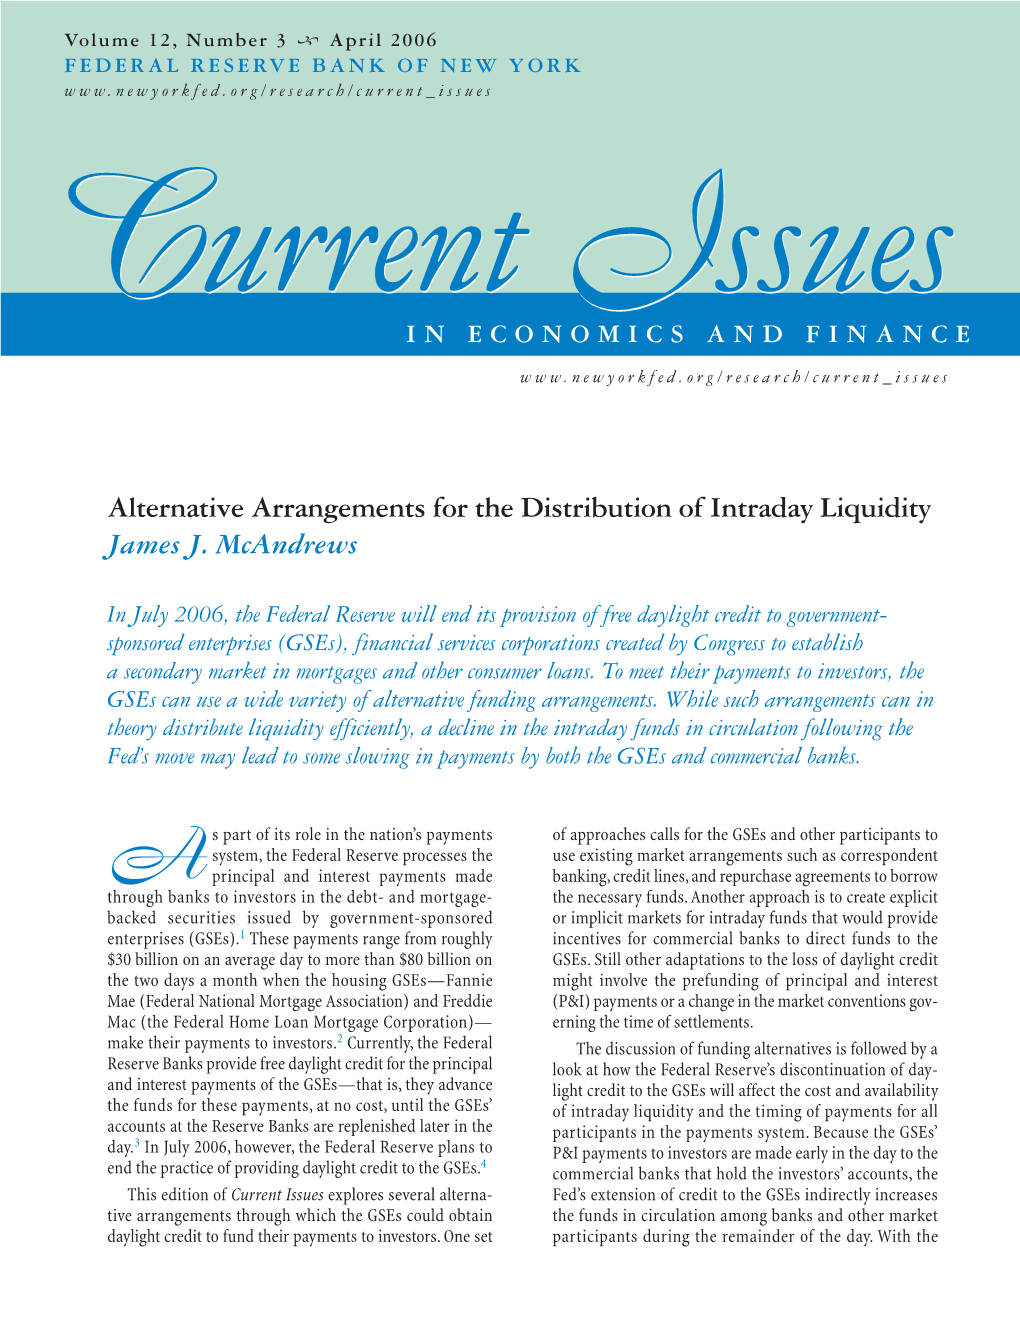 Alternative Arrangements for the Distribution of Intraday Liquidity James J